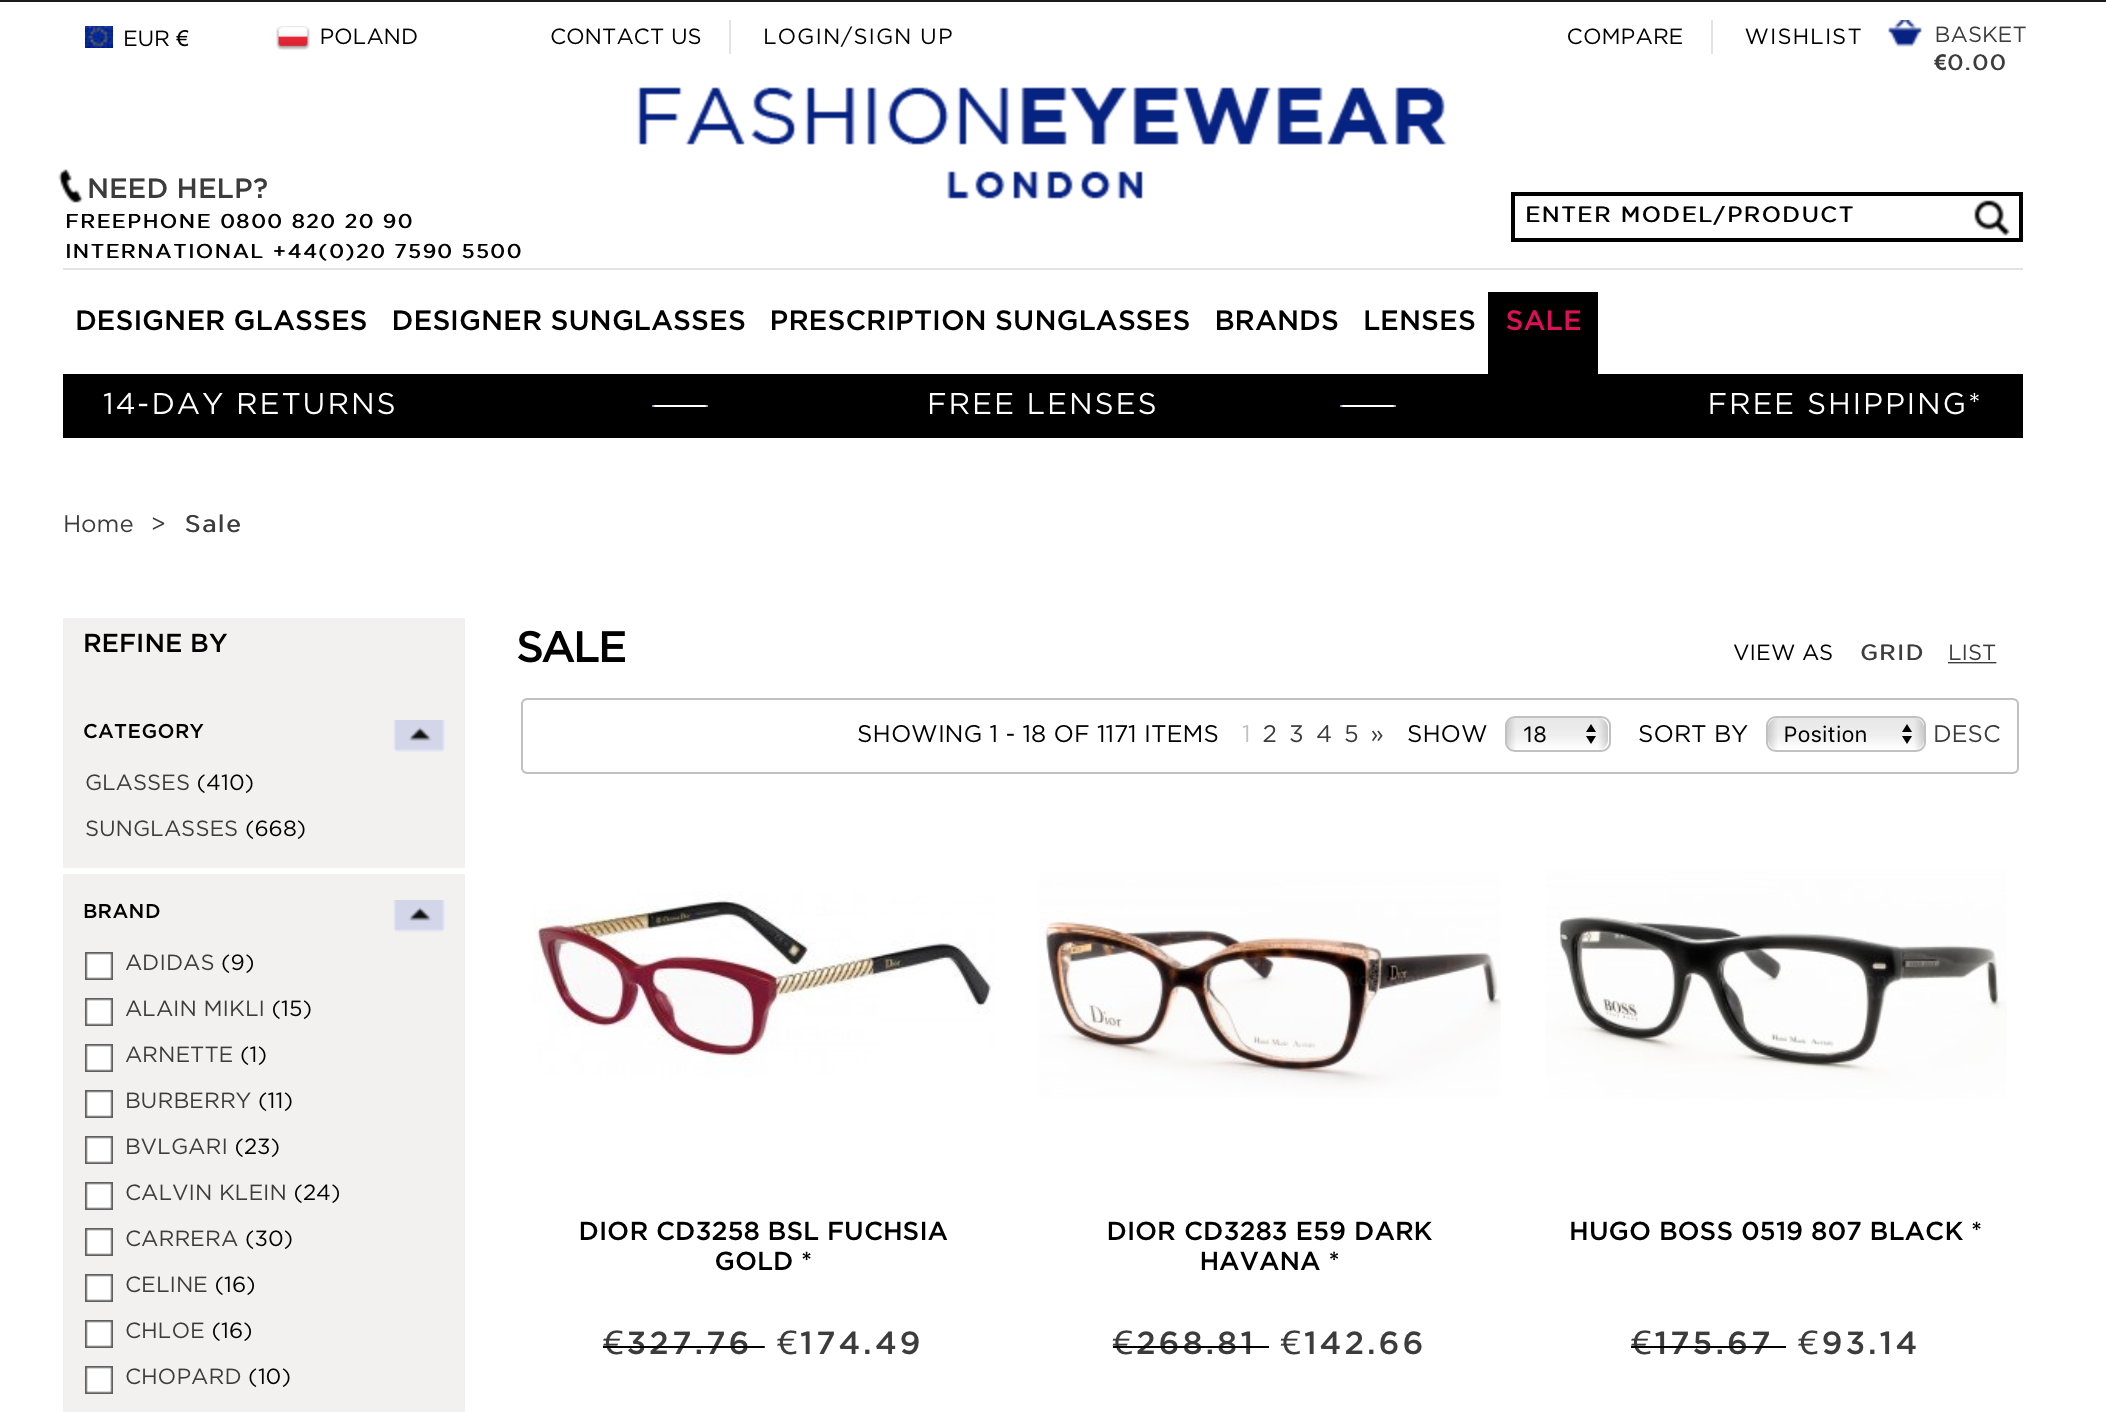 Fashion Eye Wear: Sale up to 50% off sunglasses